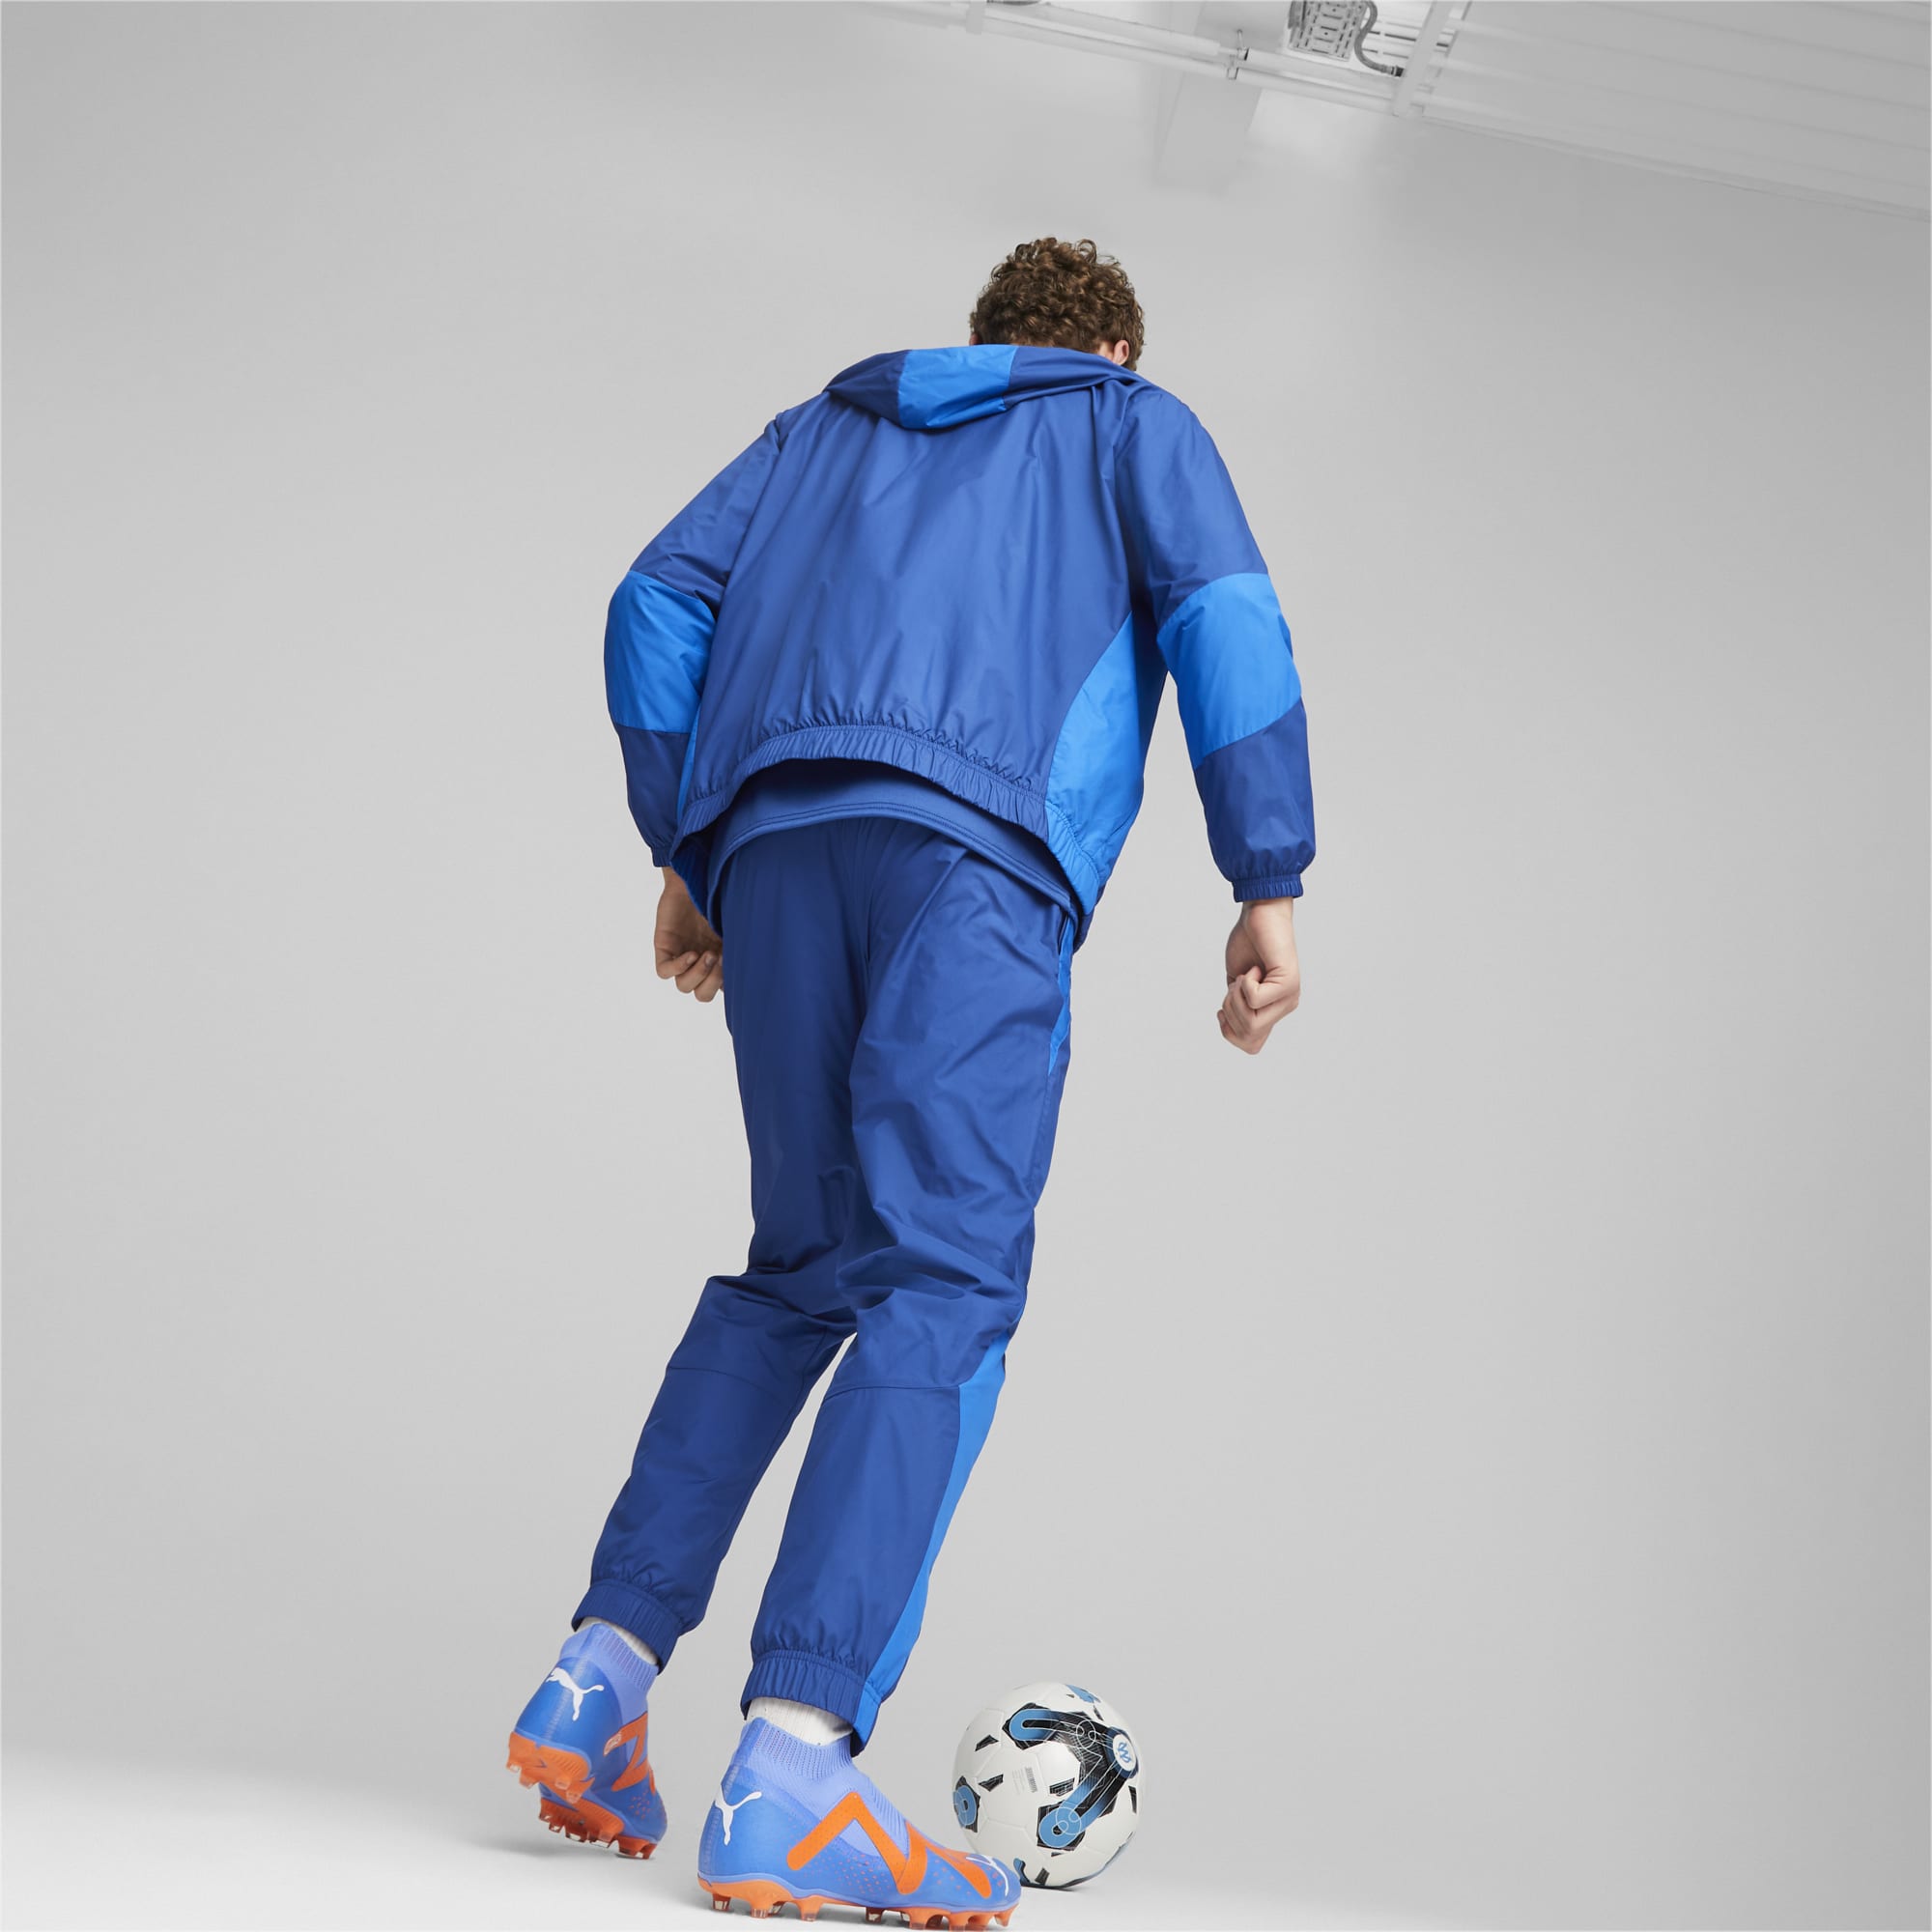 Men's PUMA Olympique De Marseille Prematch Football Jacket, Royal Blue, Size 3XL, Clothing